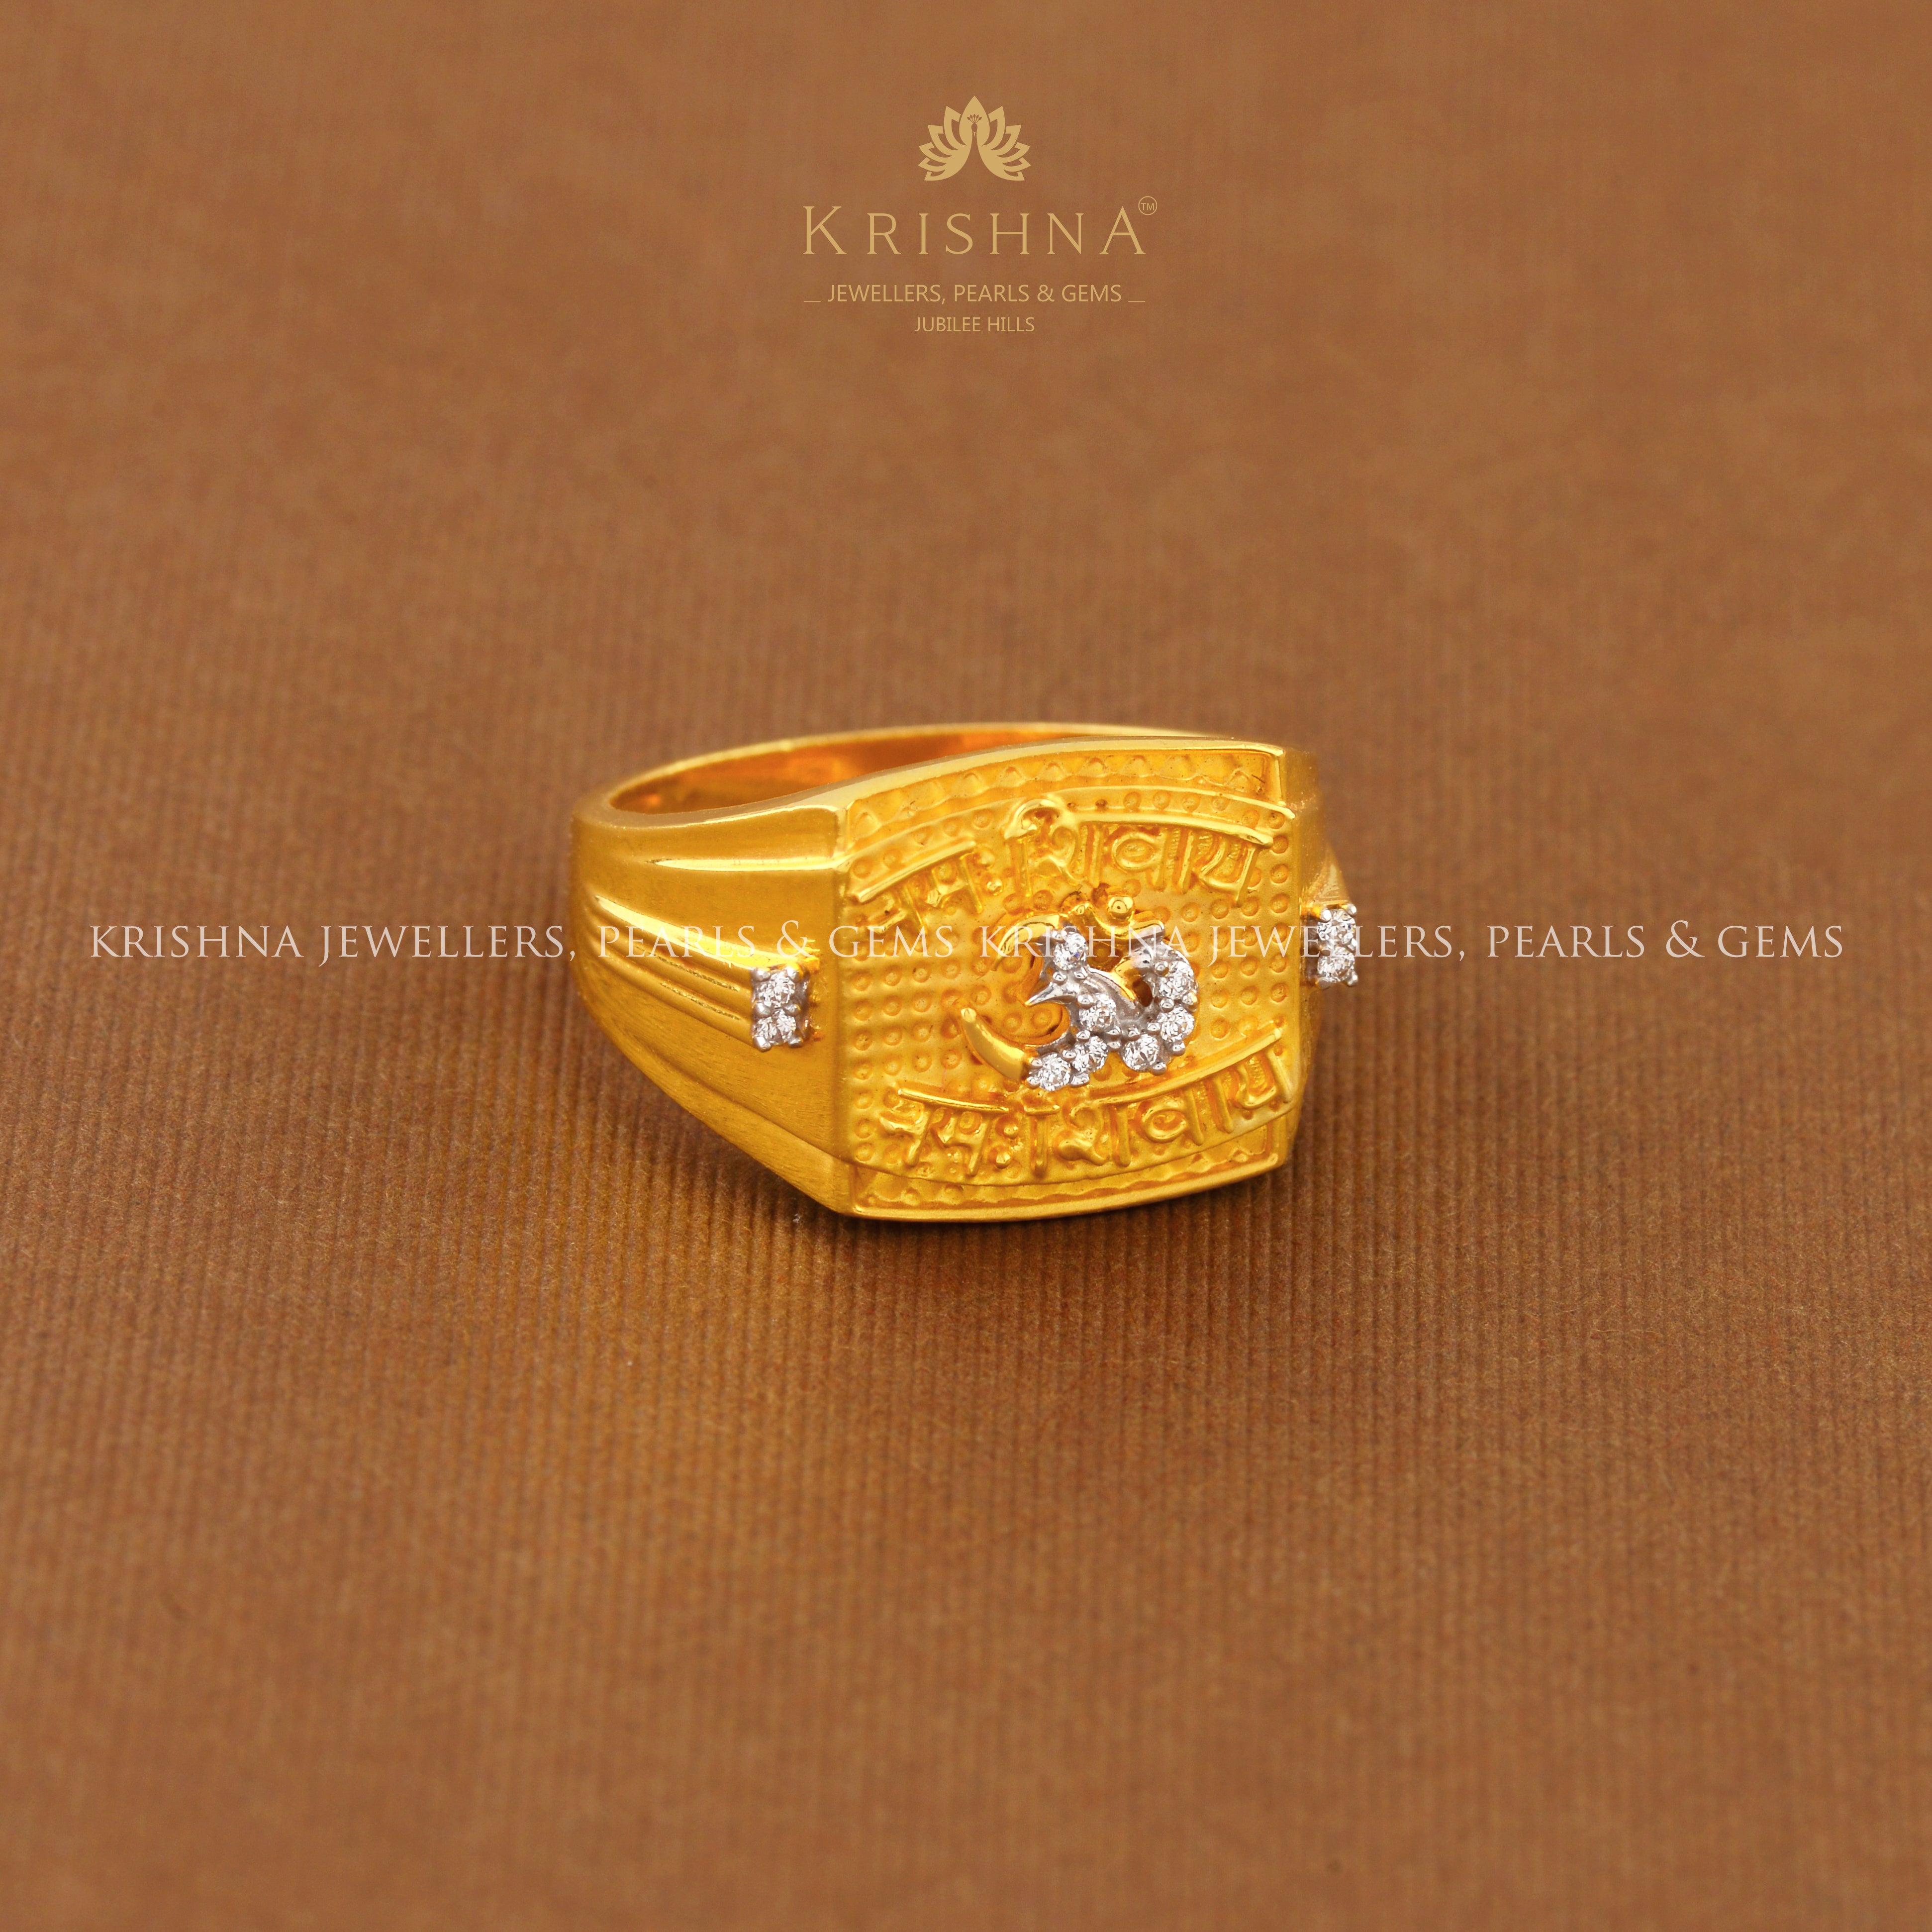 fake 4 gram gold ring, open| Alibaba.com